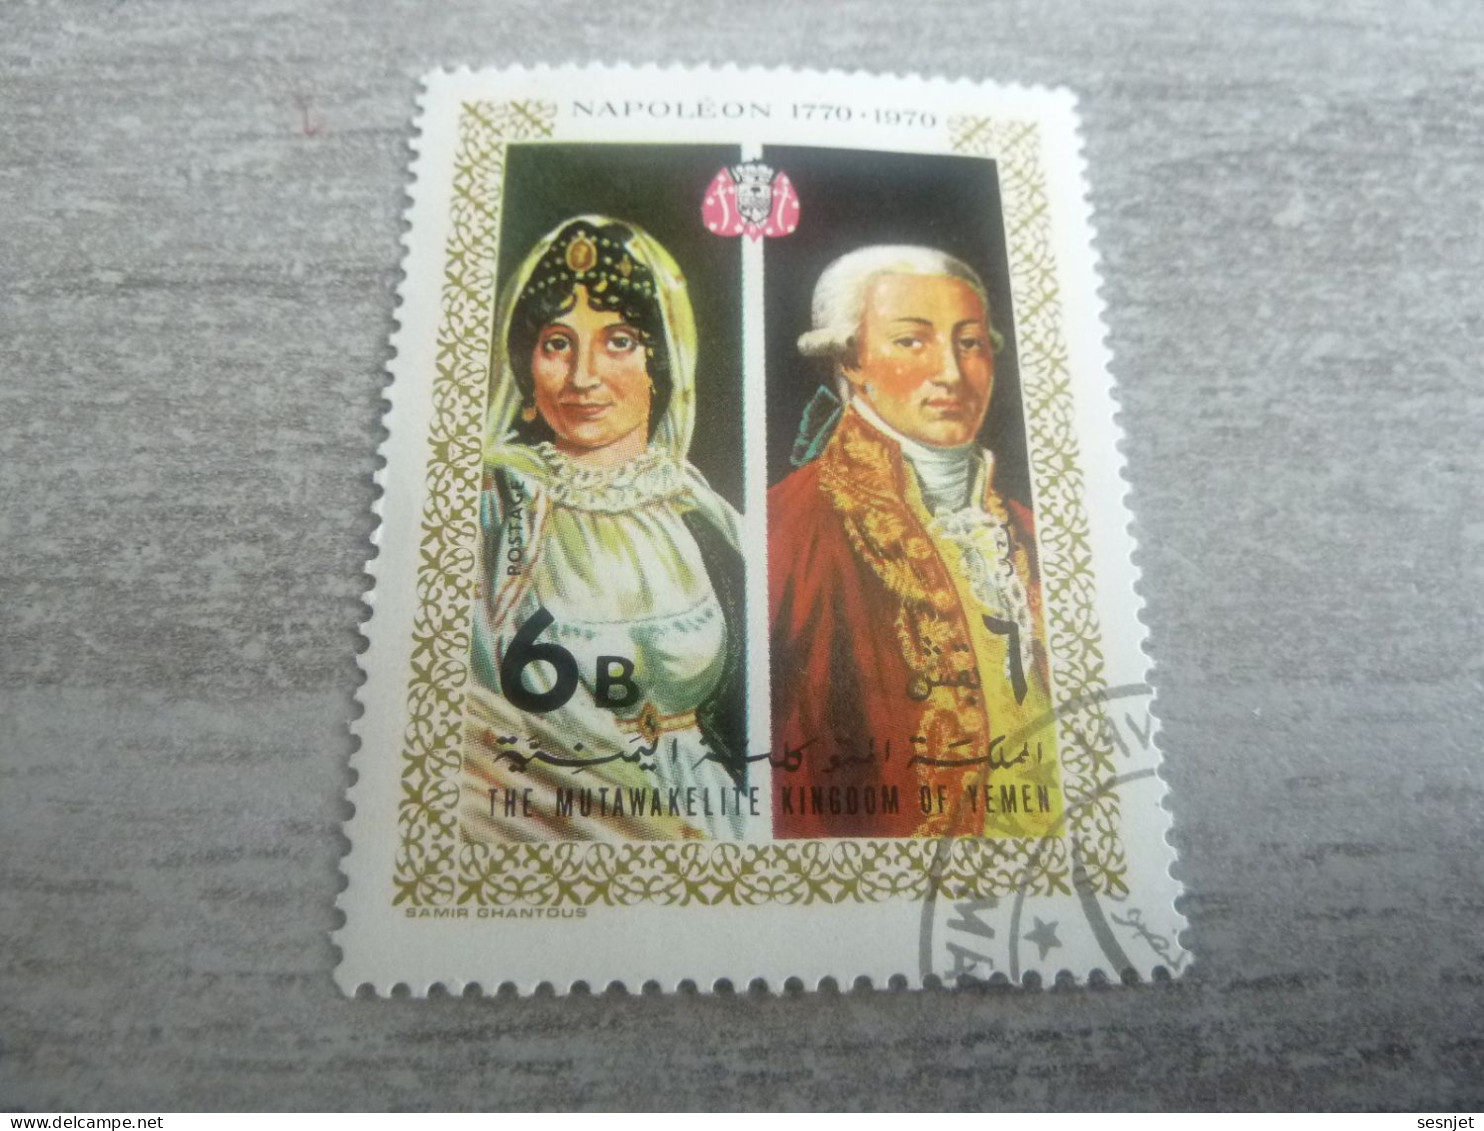 Yemen - Napoleon - The Mutawakelite - Kingdom The Yemen - 6B - Postage - Polychrome - Oblitéré - 1970 - - Napoleón